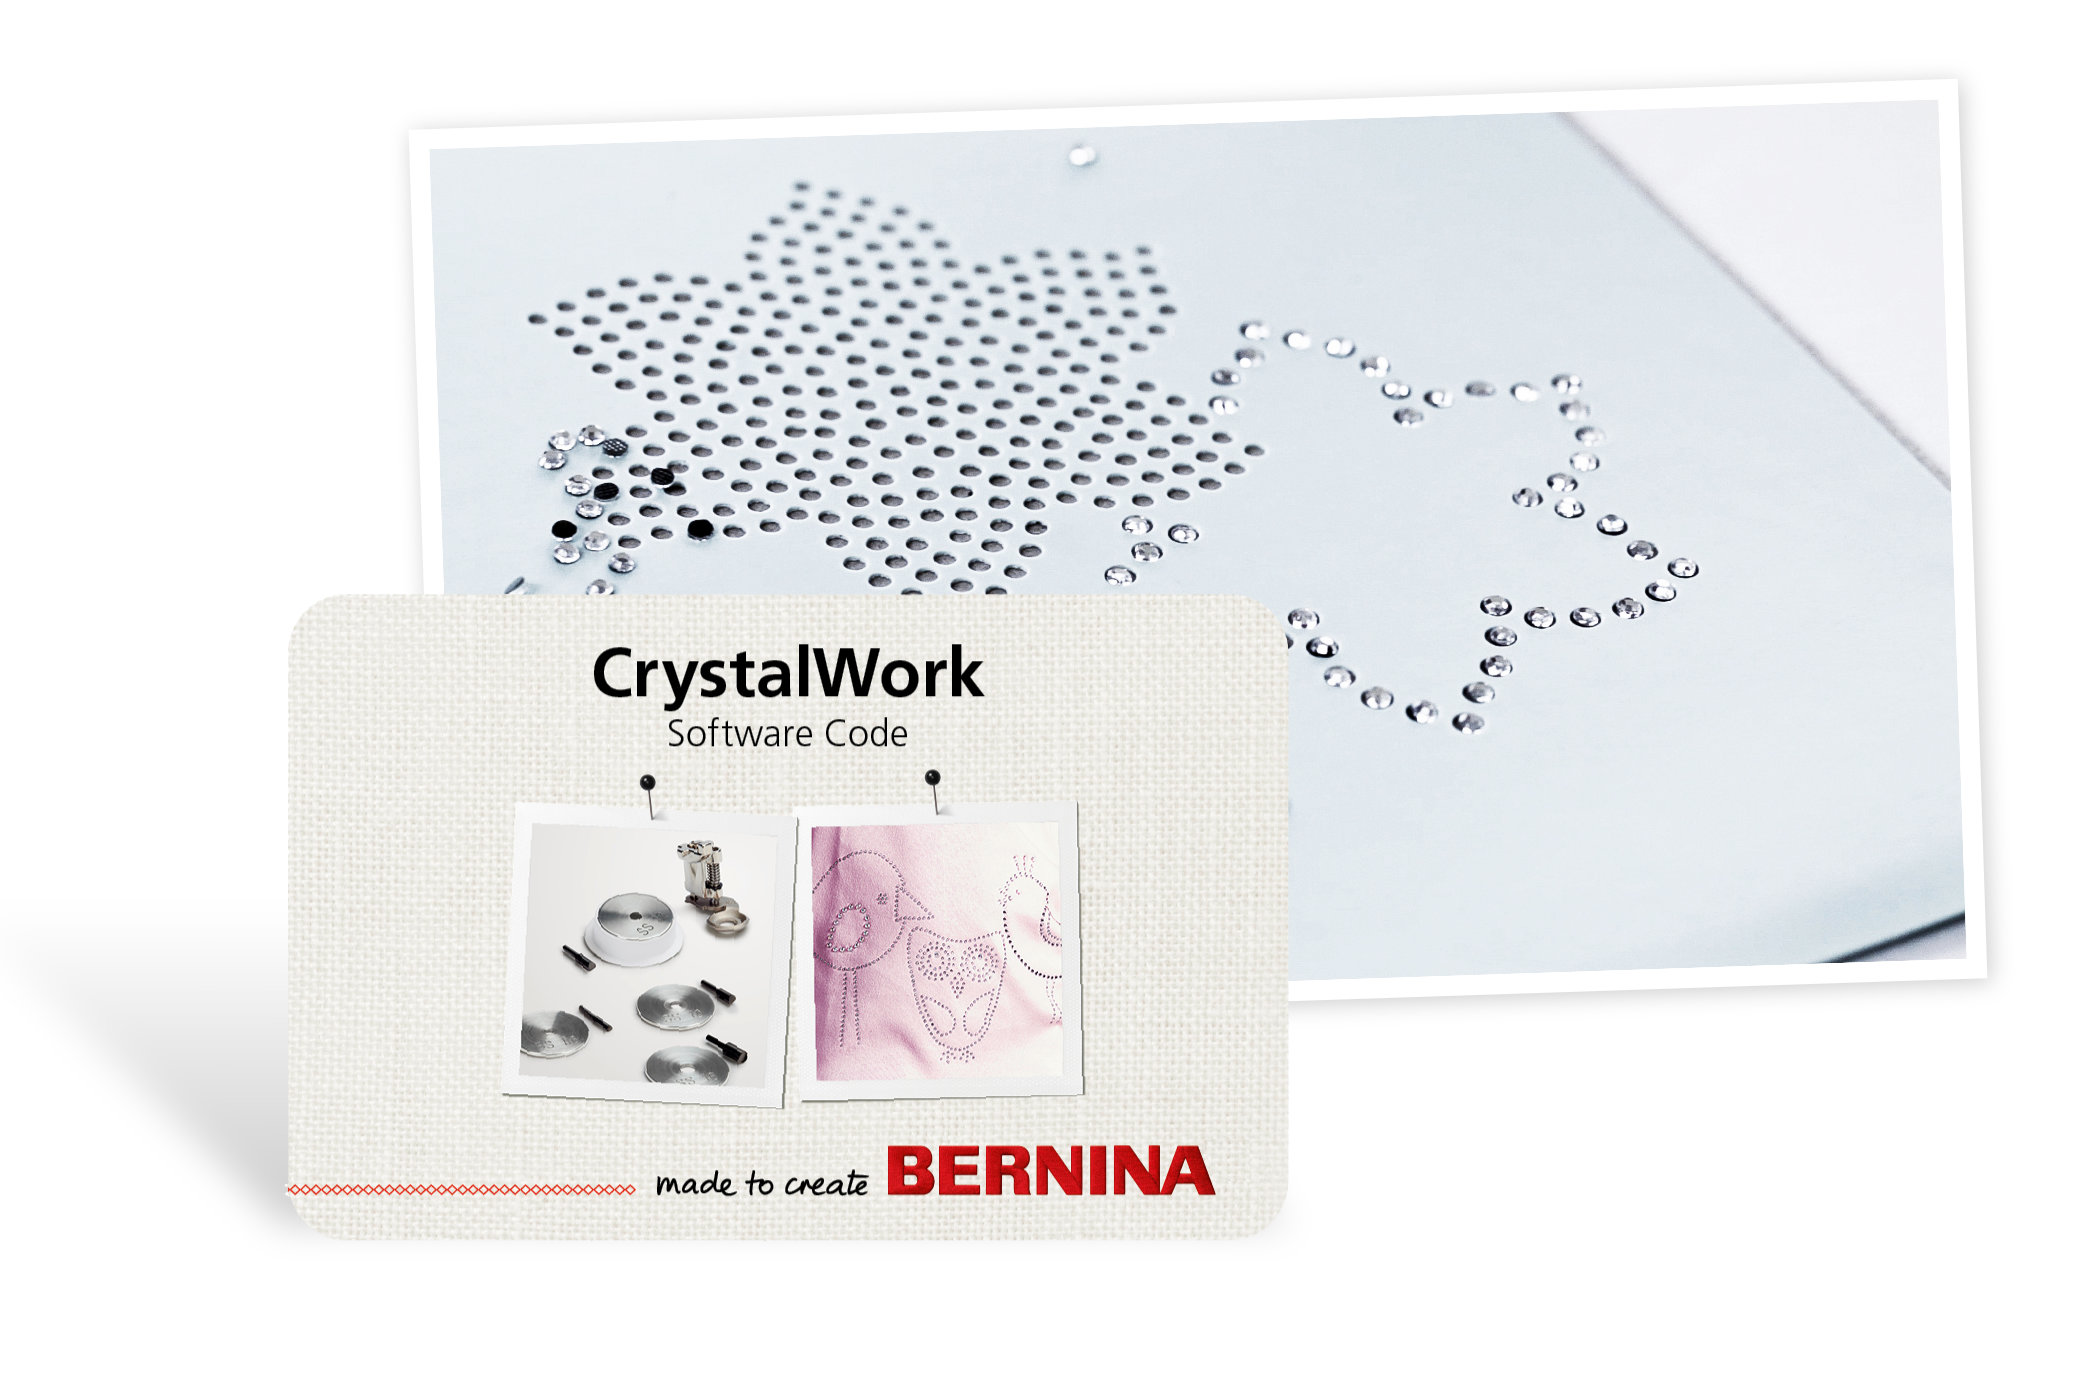 BERNINA CrystalWork Software